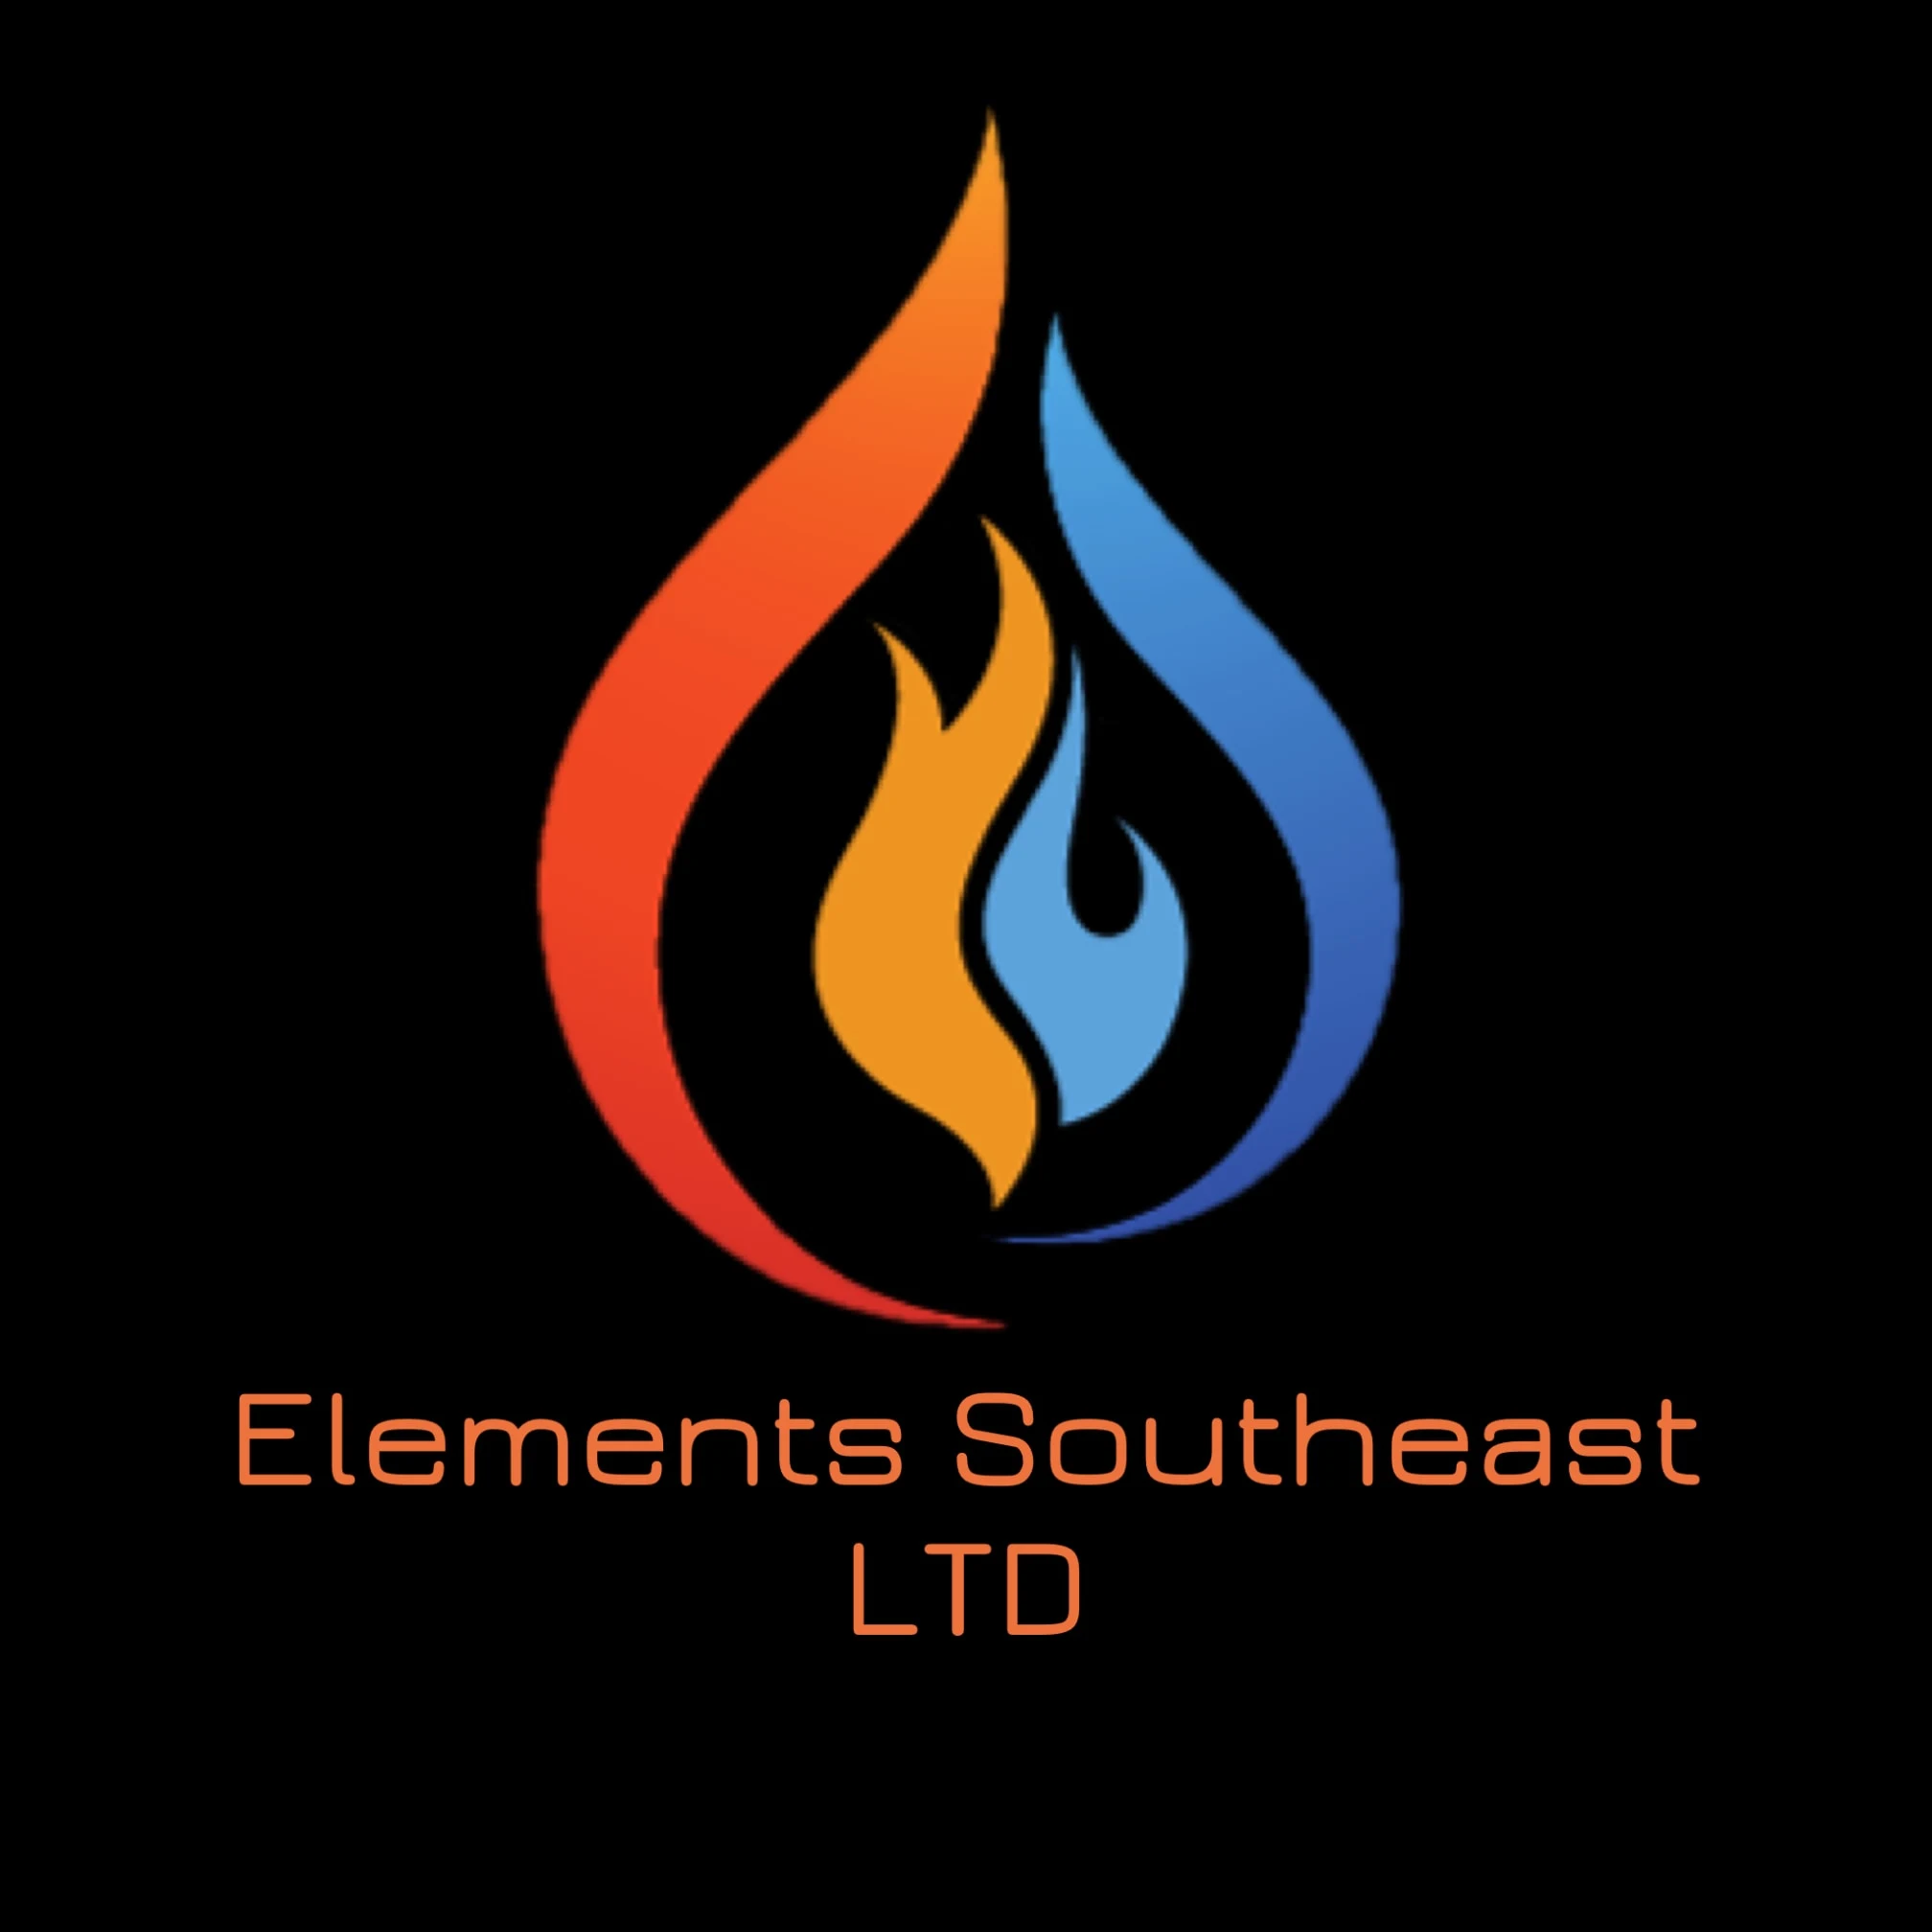 LOGO Elements Southeast Ltd Rochester 07538 462281